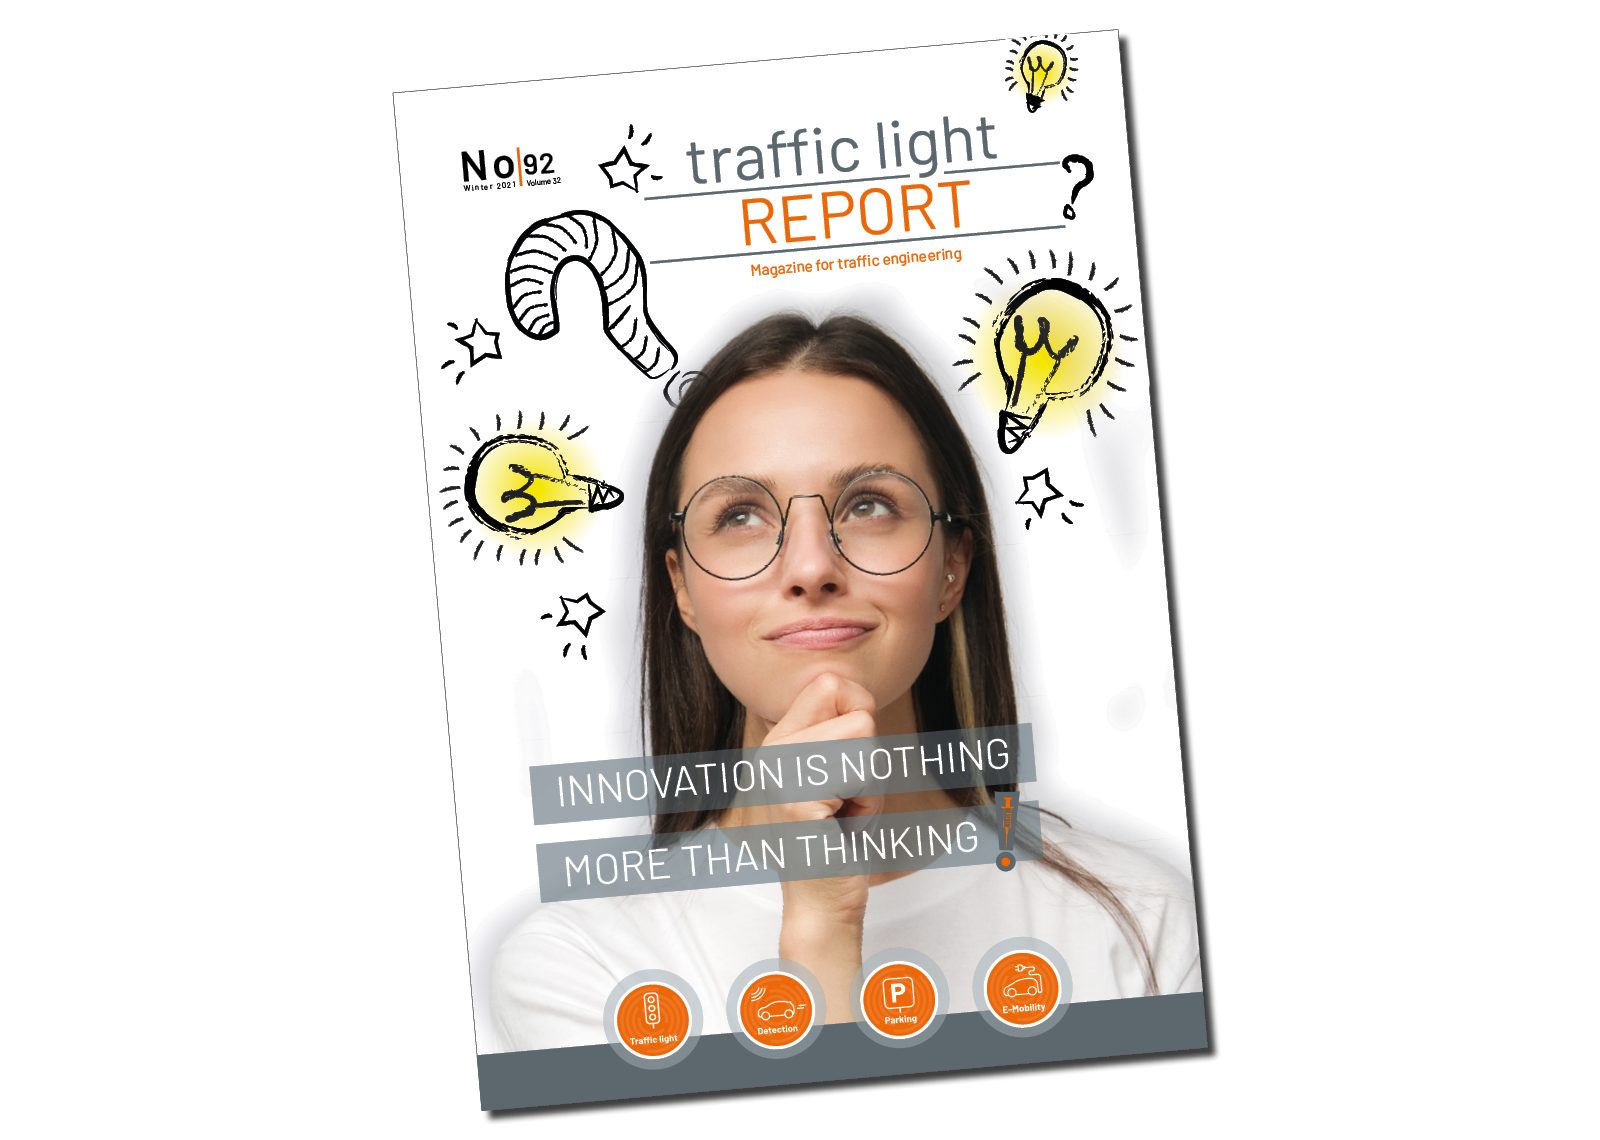 Traffic light report no.92